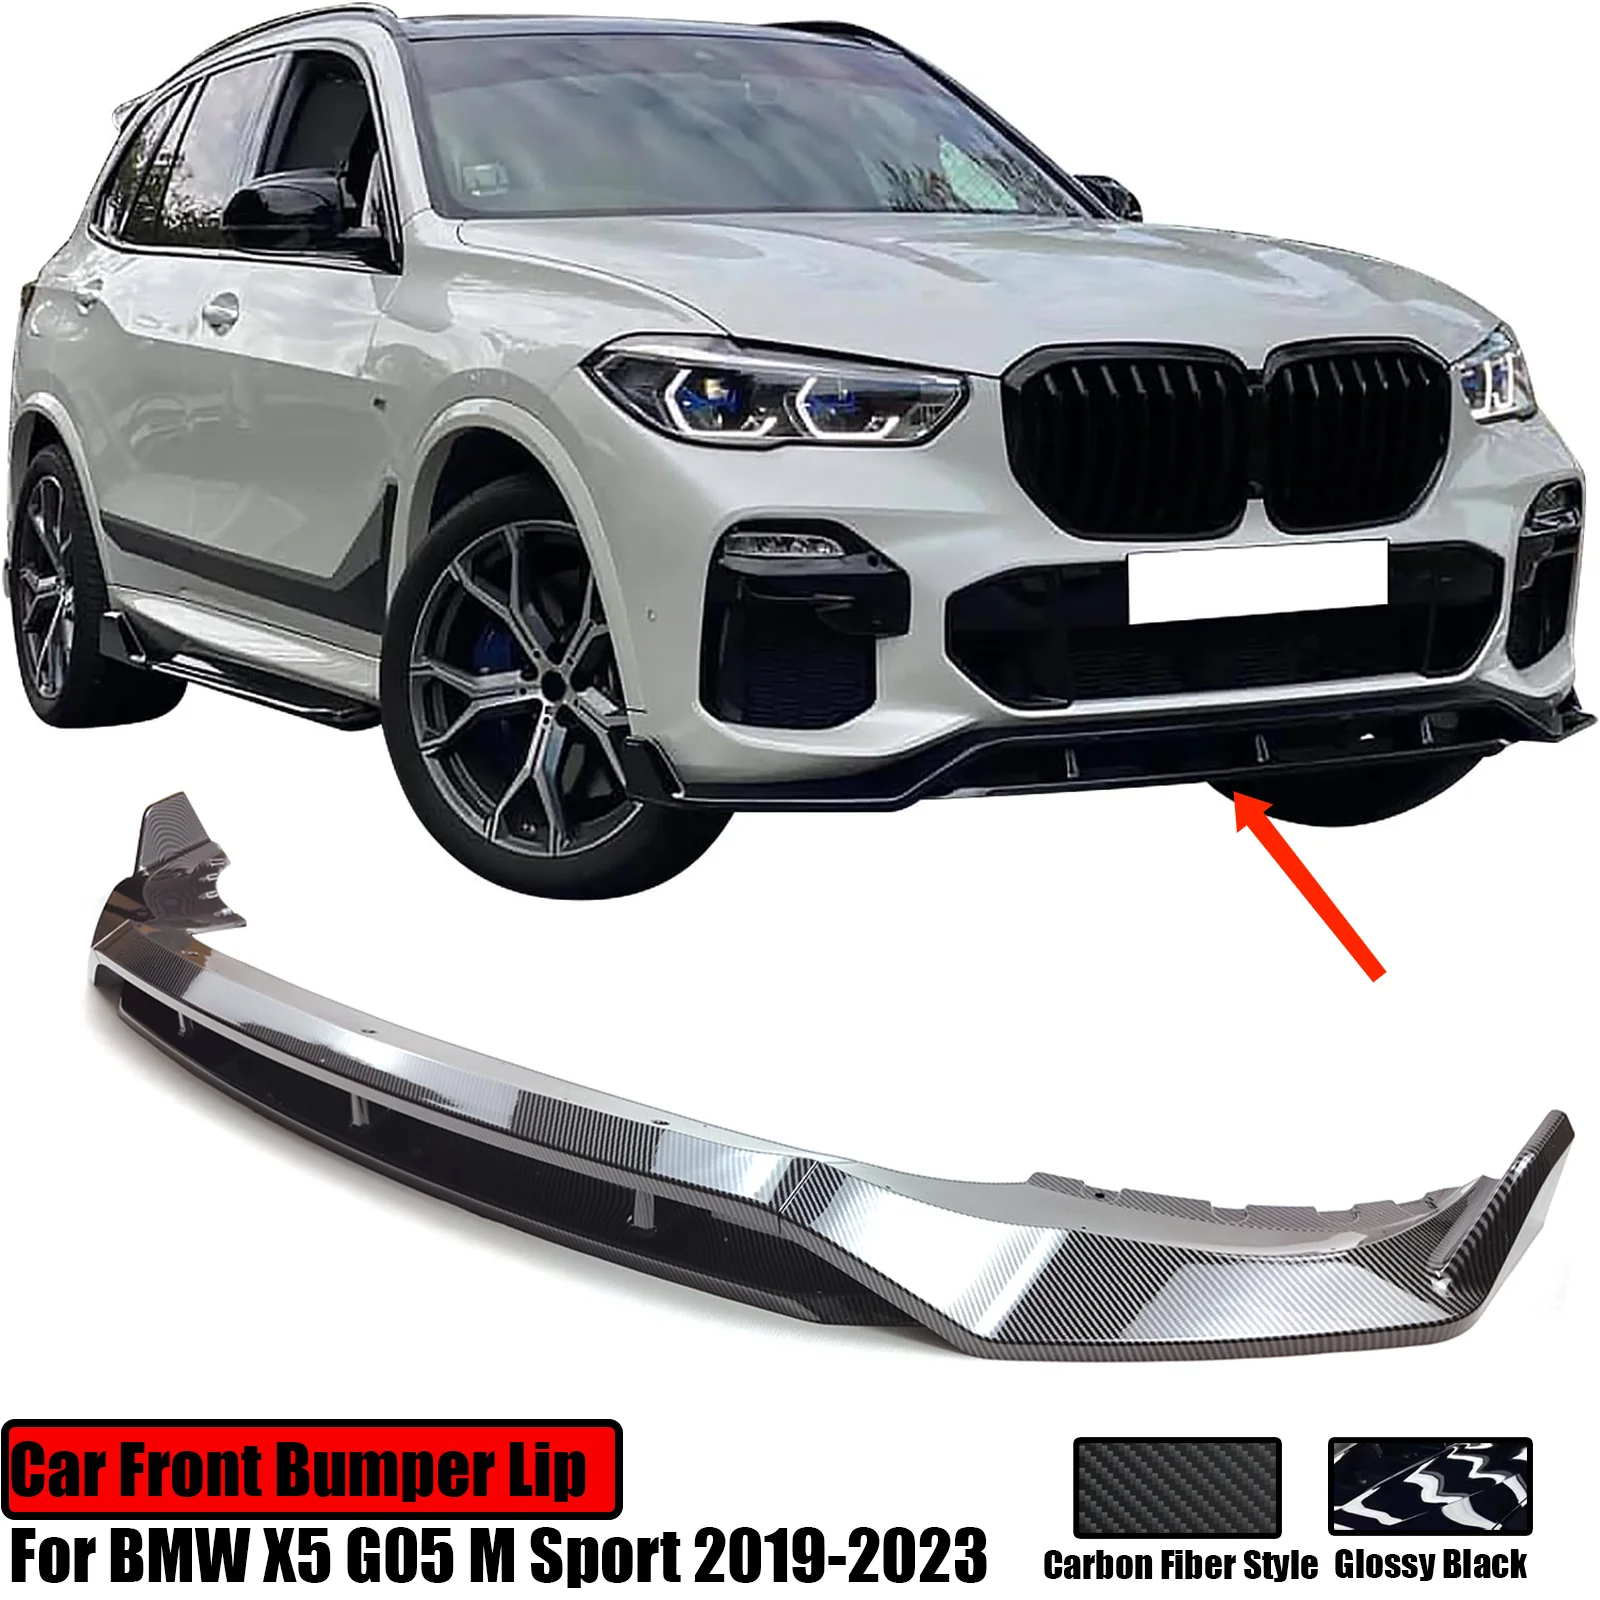 

For 2019-2023 BMW X5 G05 M Sport Car Front Bumper Lip Splitter Spoiler Guard Protector Exterior Body Kit Car Accessories 4 PCS